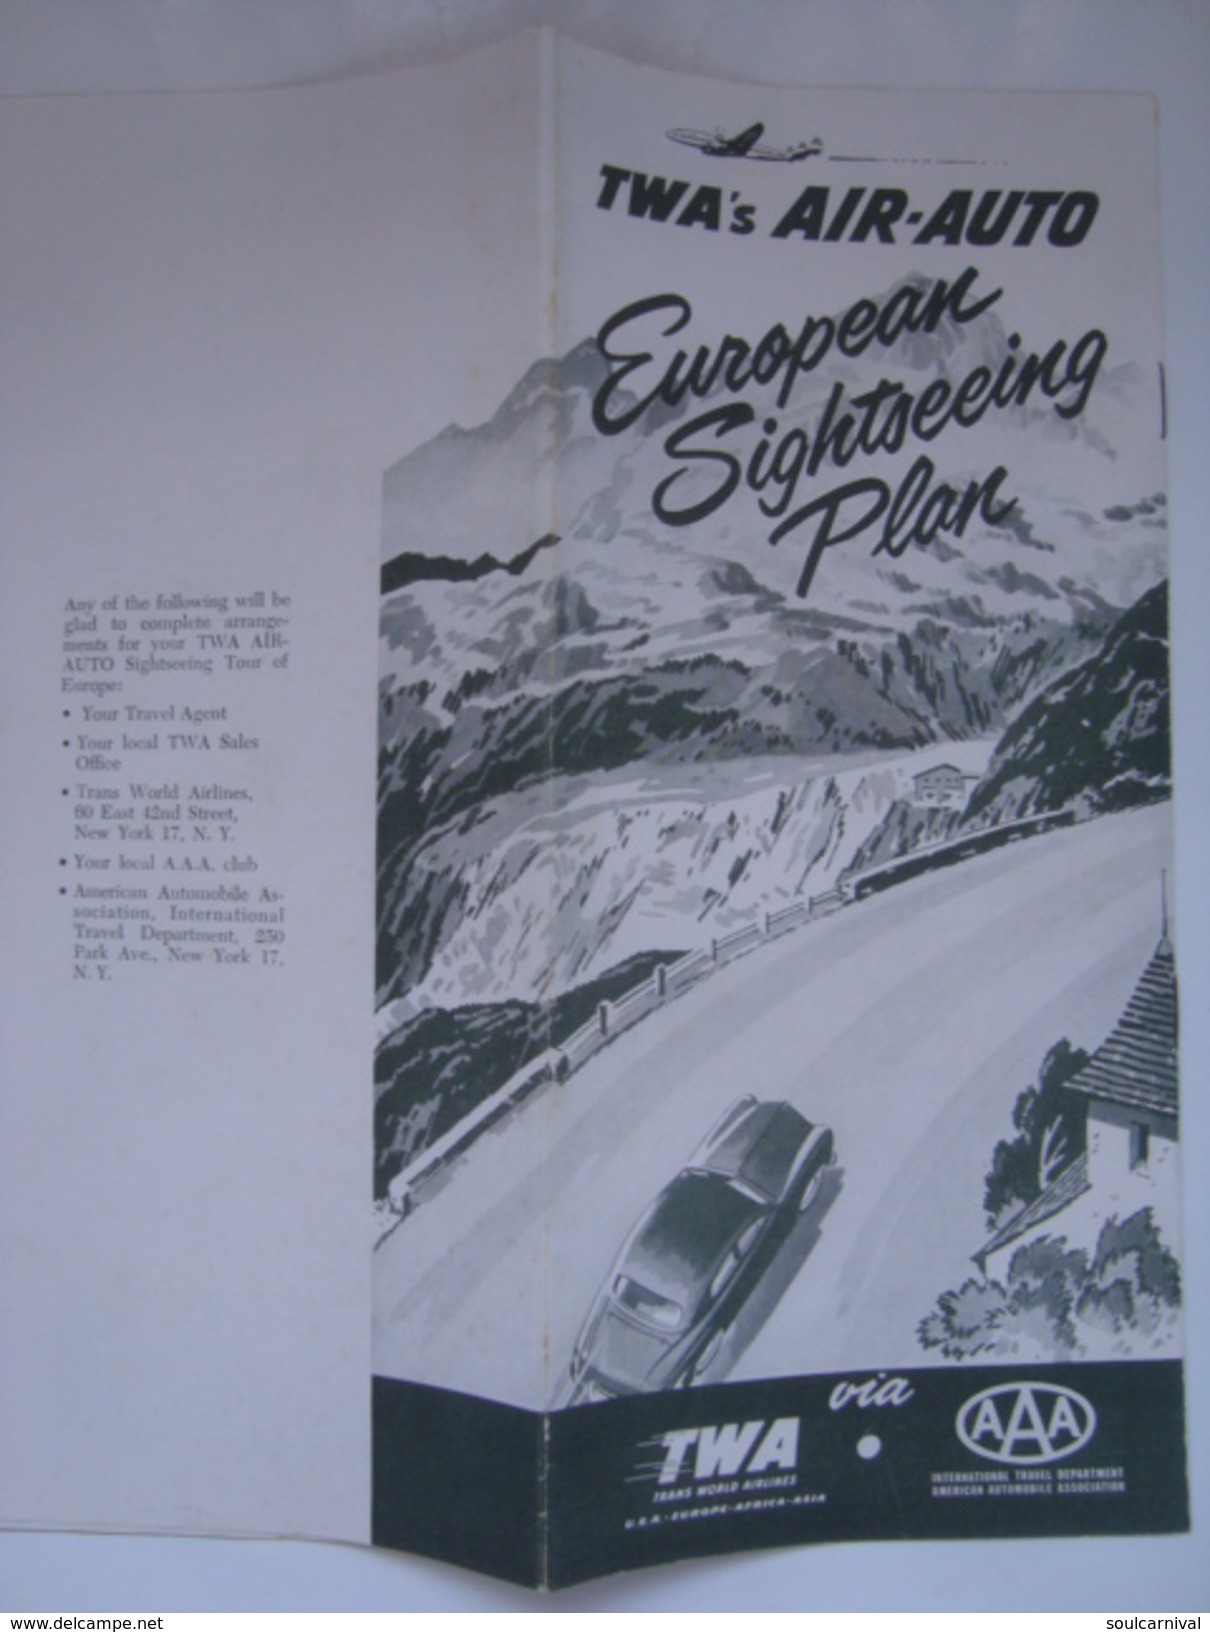 TWA'S AIR-AUTO. EUROPEAN SIGHTSEEING PLAN. TWA VIA AAA - 1952 APROX. 8 PAGES. AMERICAN AUTOMOBILE ASSOCIATION. - Pubblicità